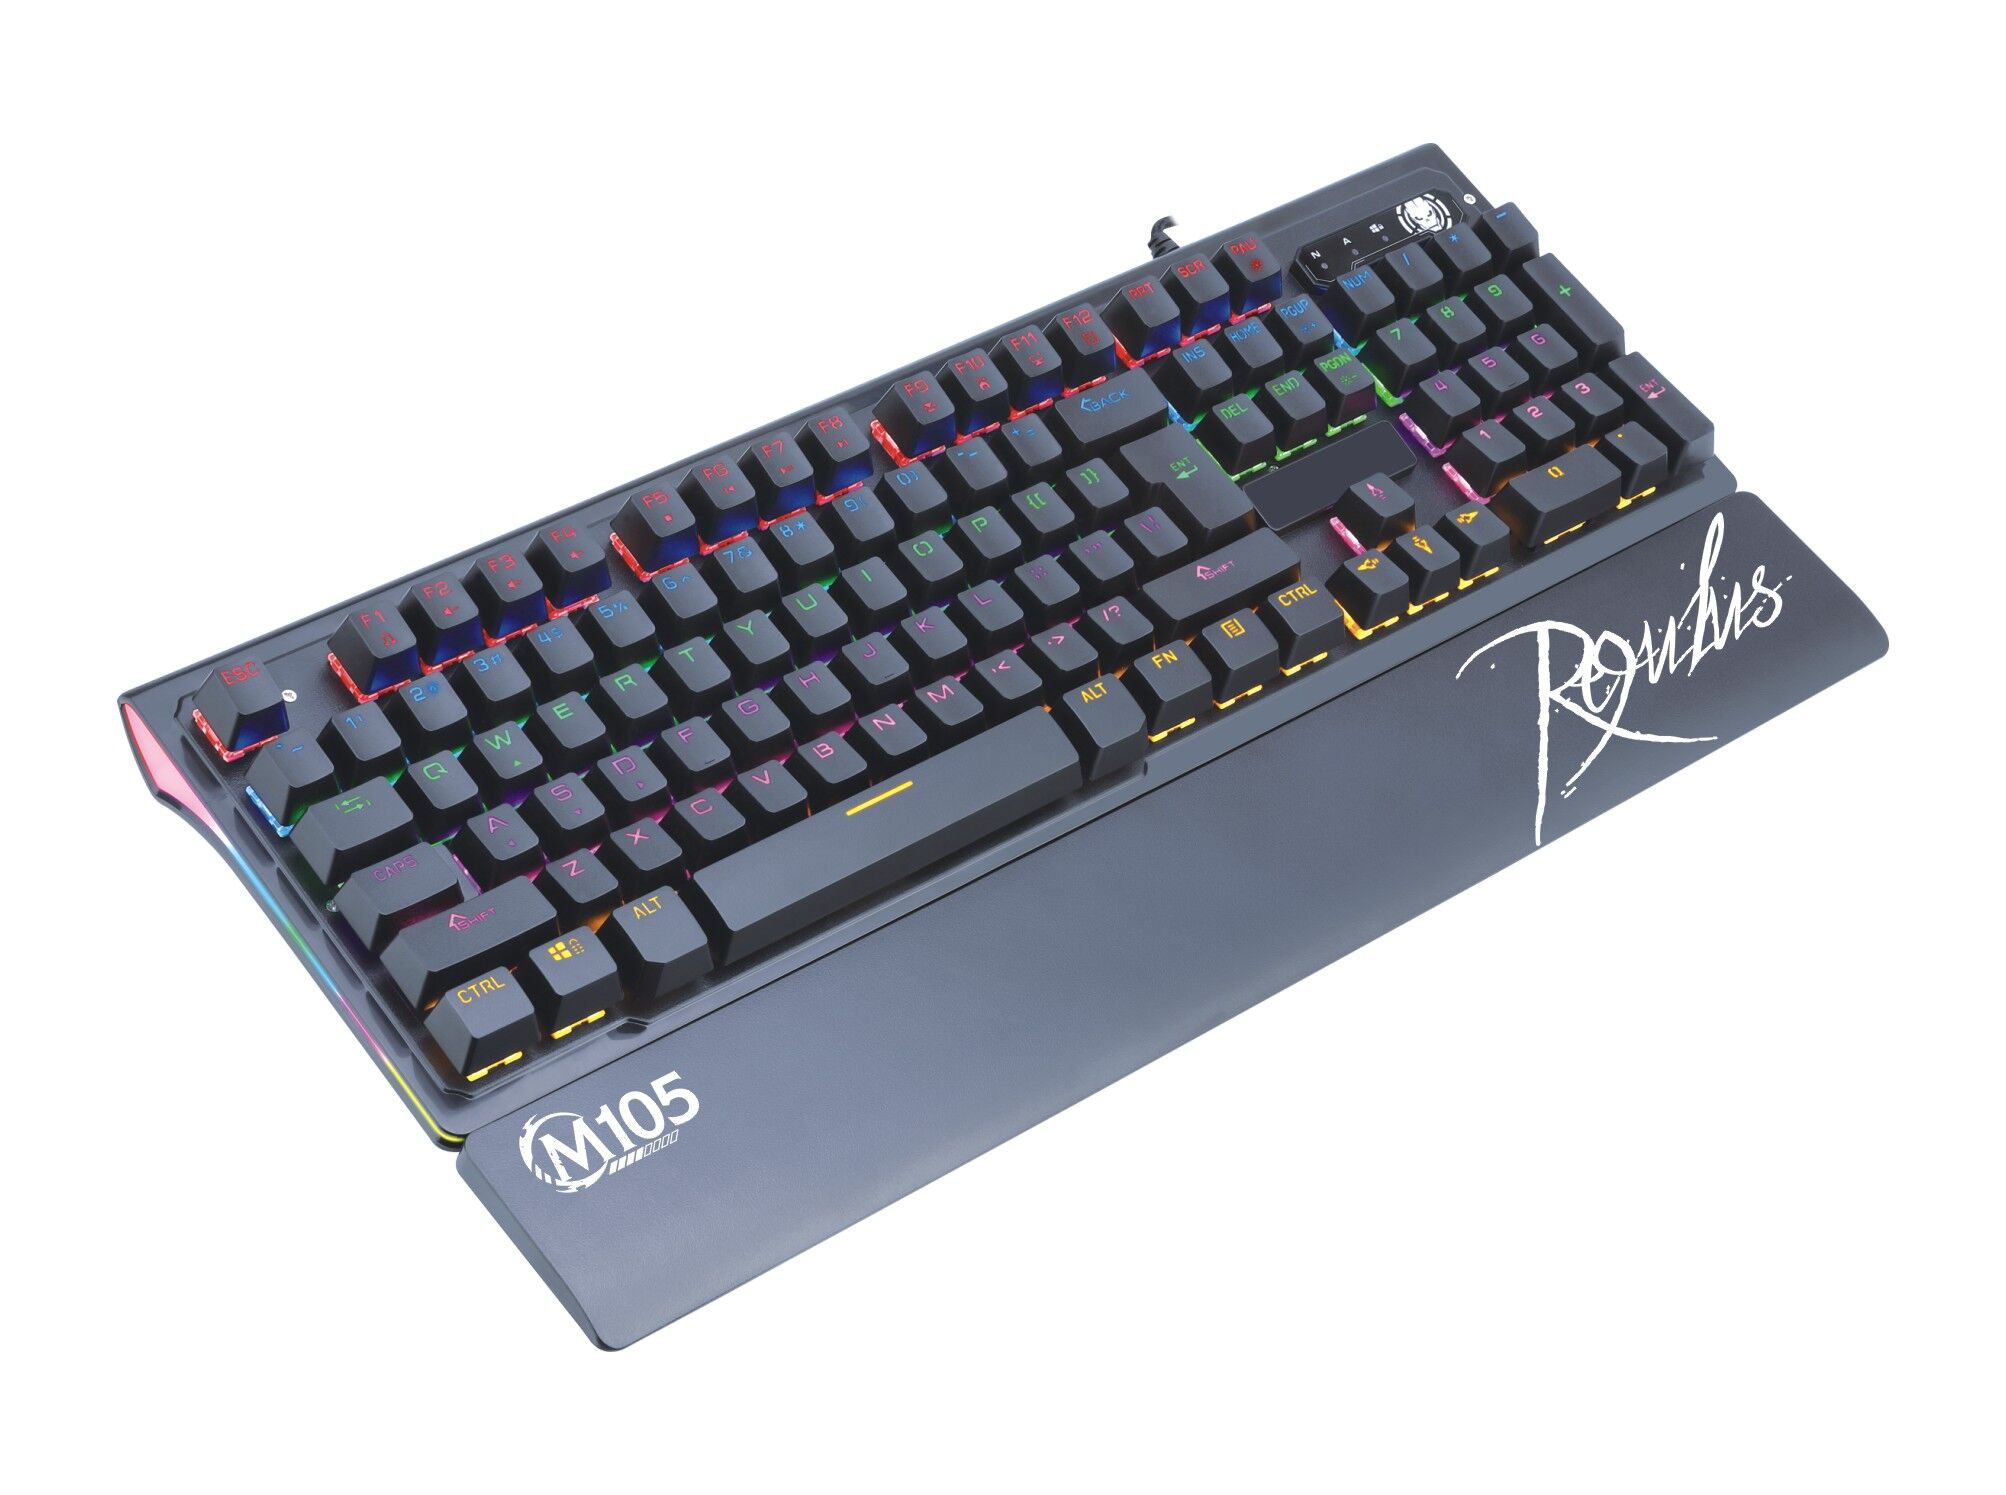 FW-905 Mechanical Keyboard